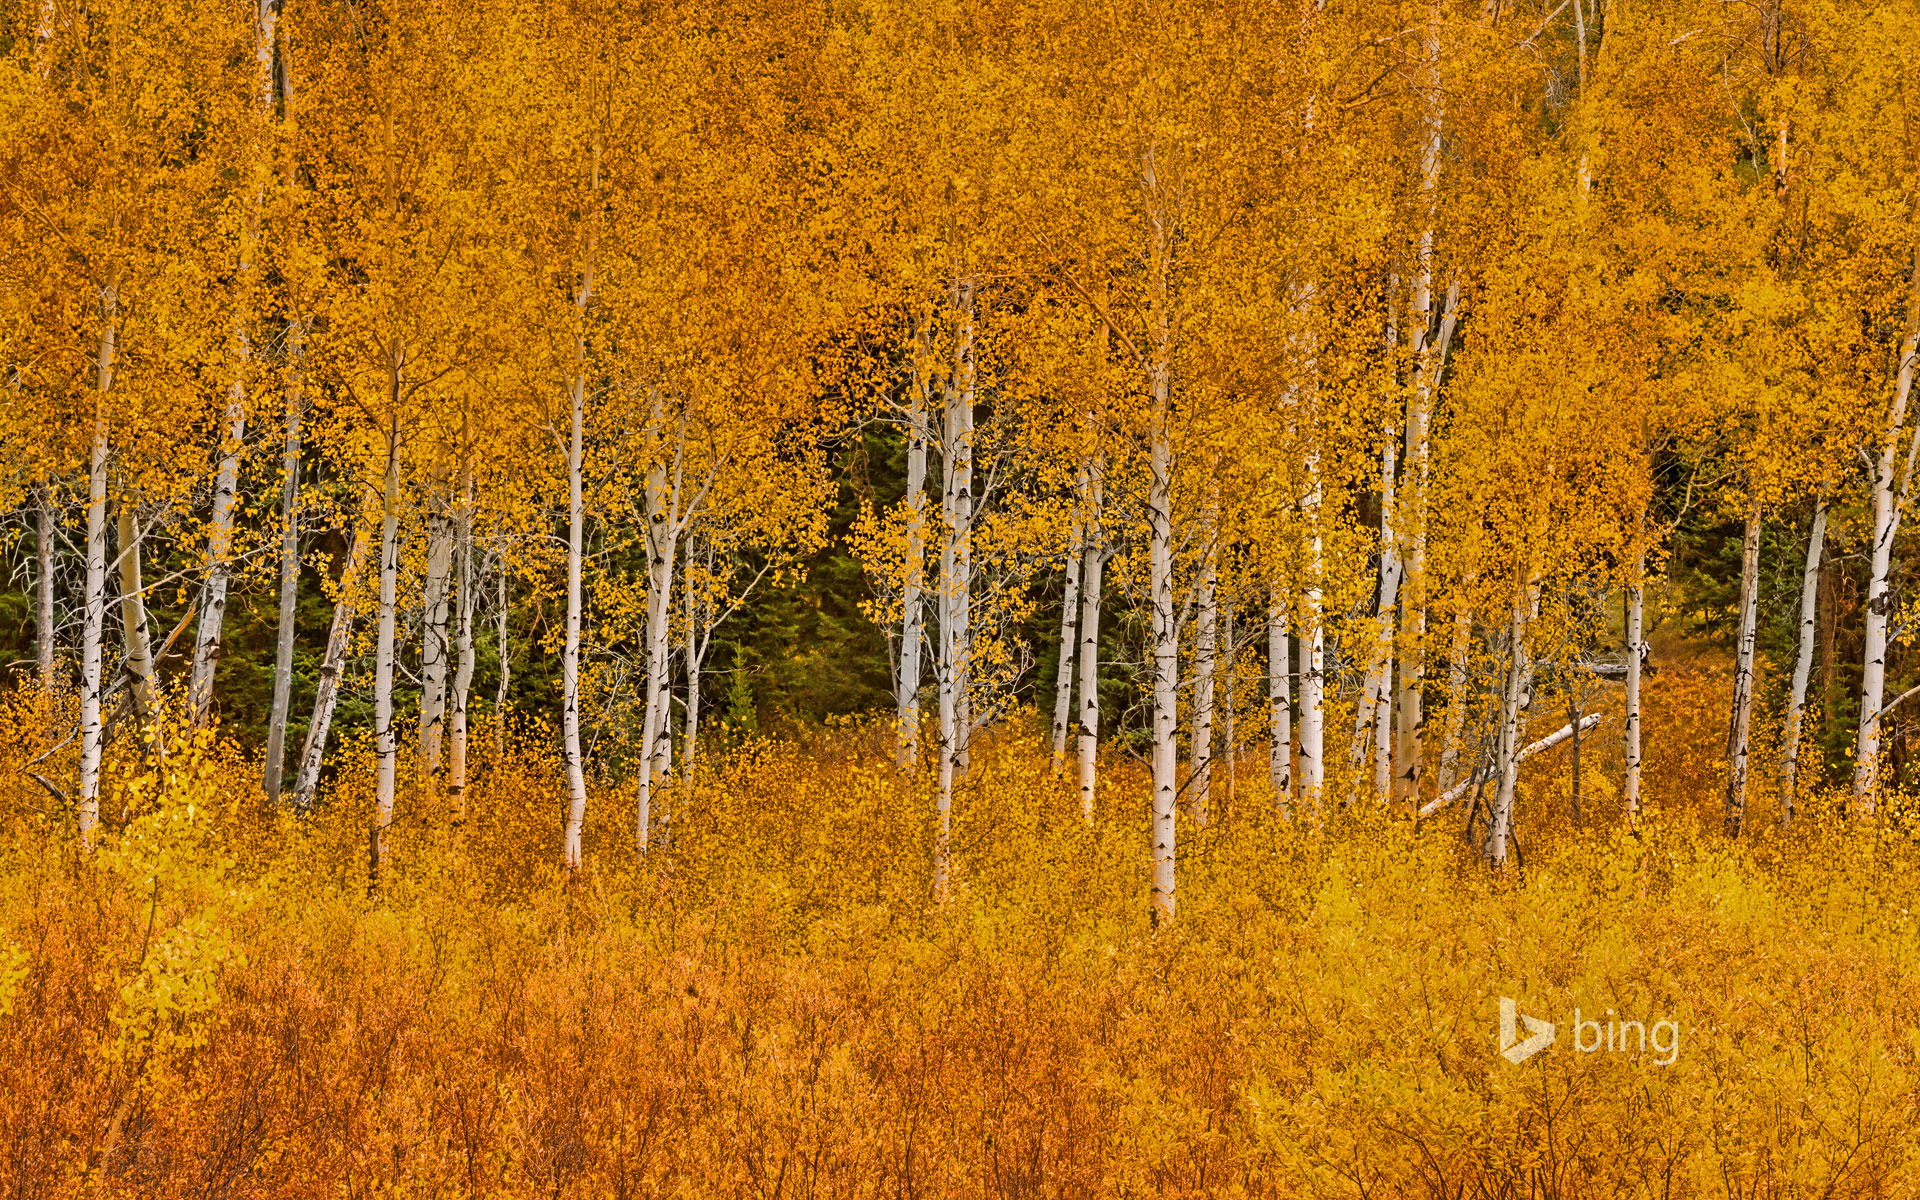 Autumn aspens in Grand Teton National Park, Wyoming